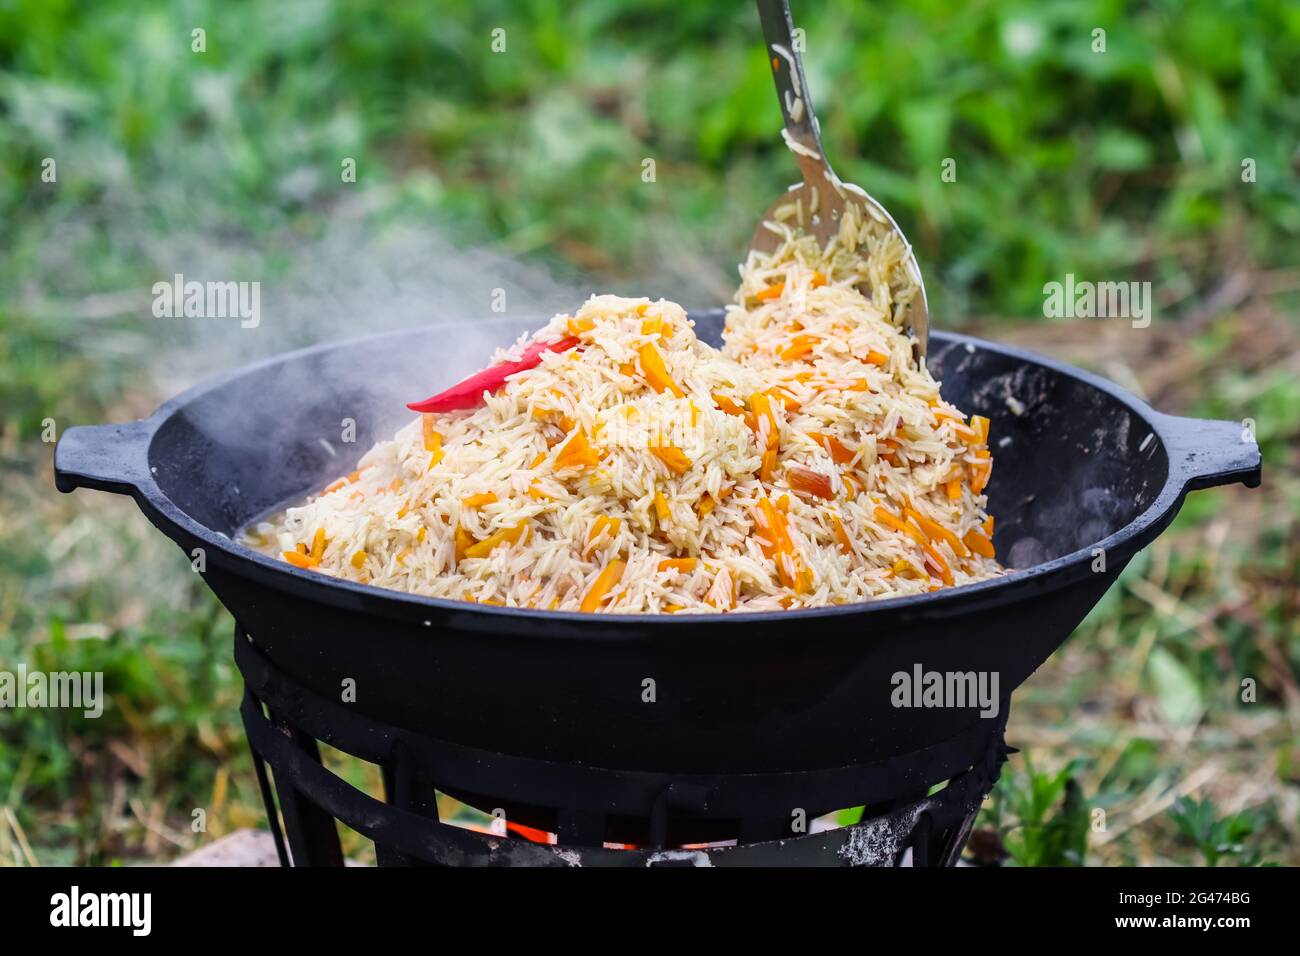 https://c8.alamy.com/comp/2G474BG/cooking-rice-pilaf-in-a-large-cast-iron-pot-on-fire-2G474BG.jpg